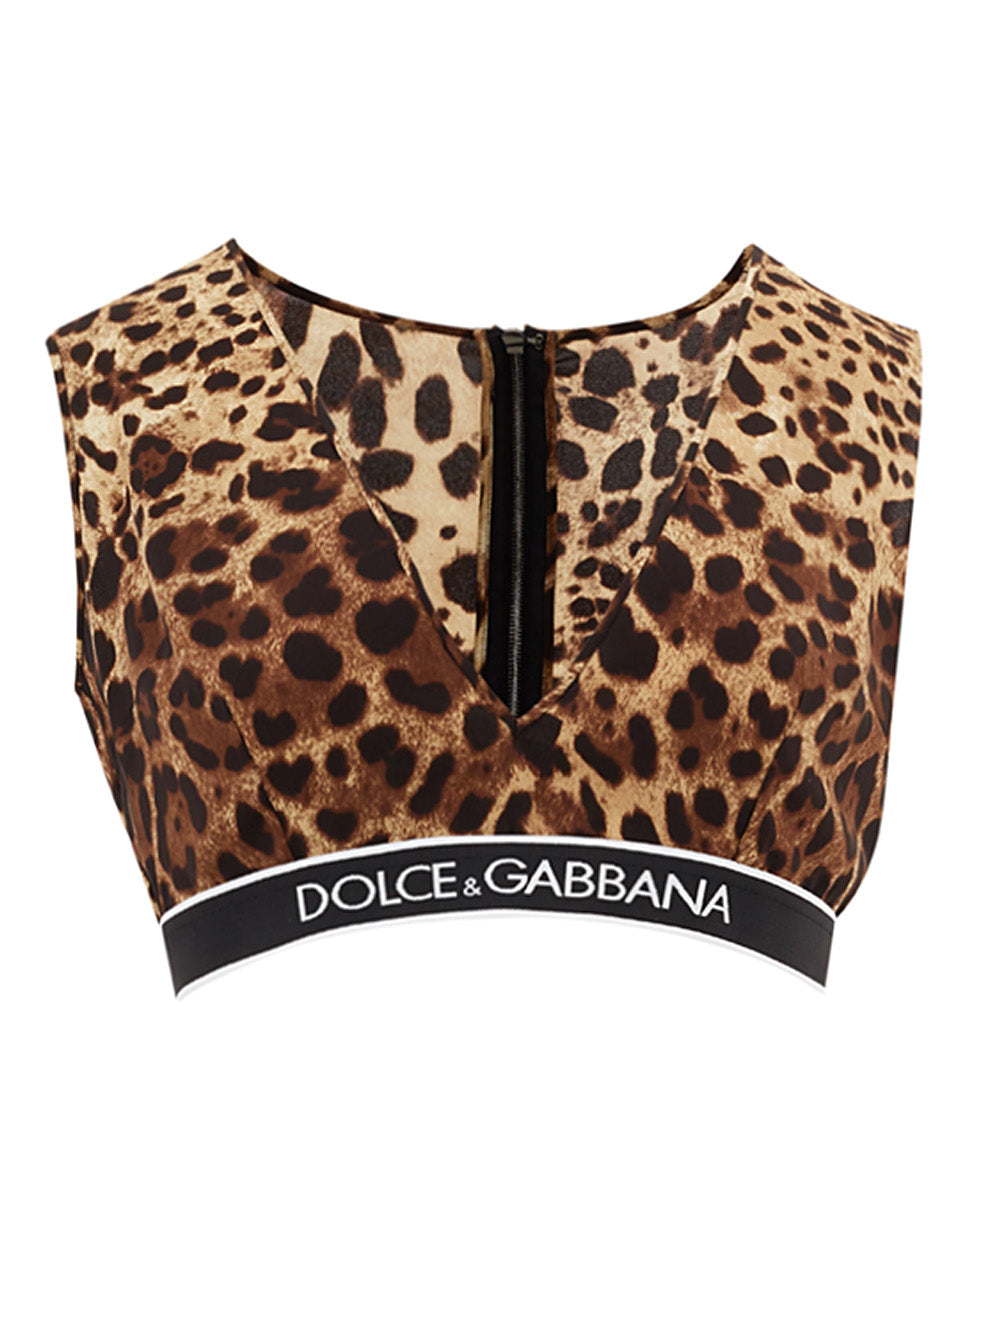 DOLCE & GABBANA Dolce & Gabbana  Leopard Print Cropped V Neck Women's Top